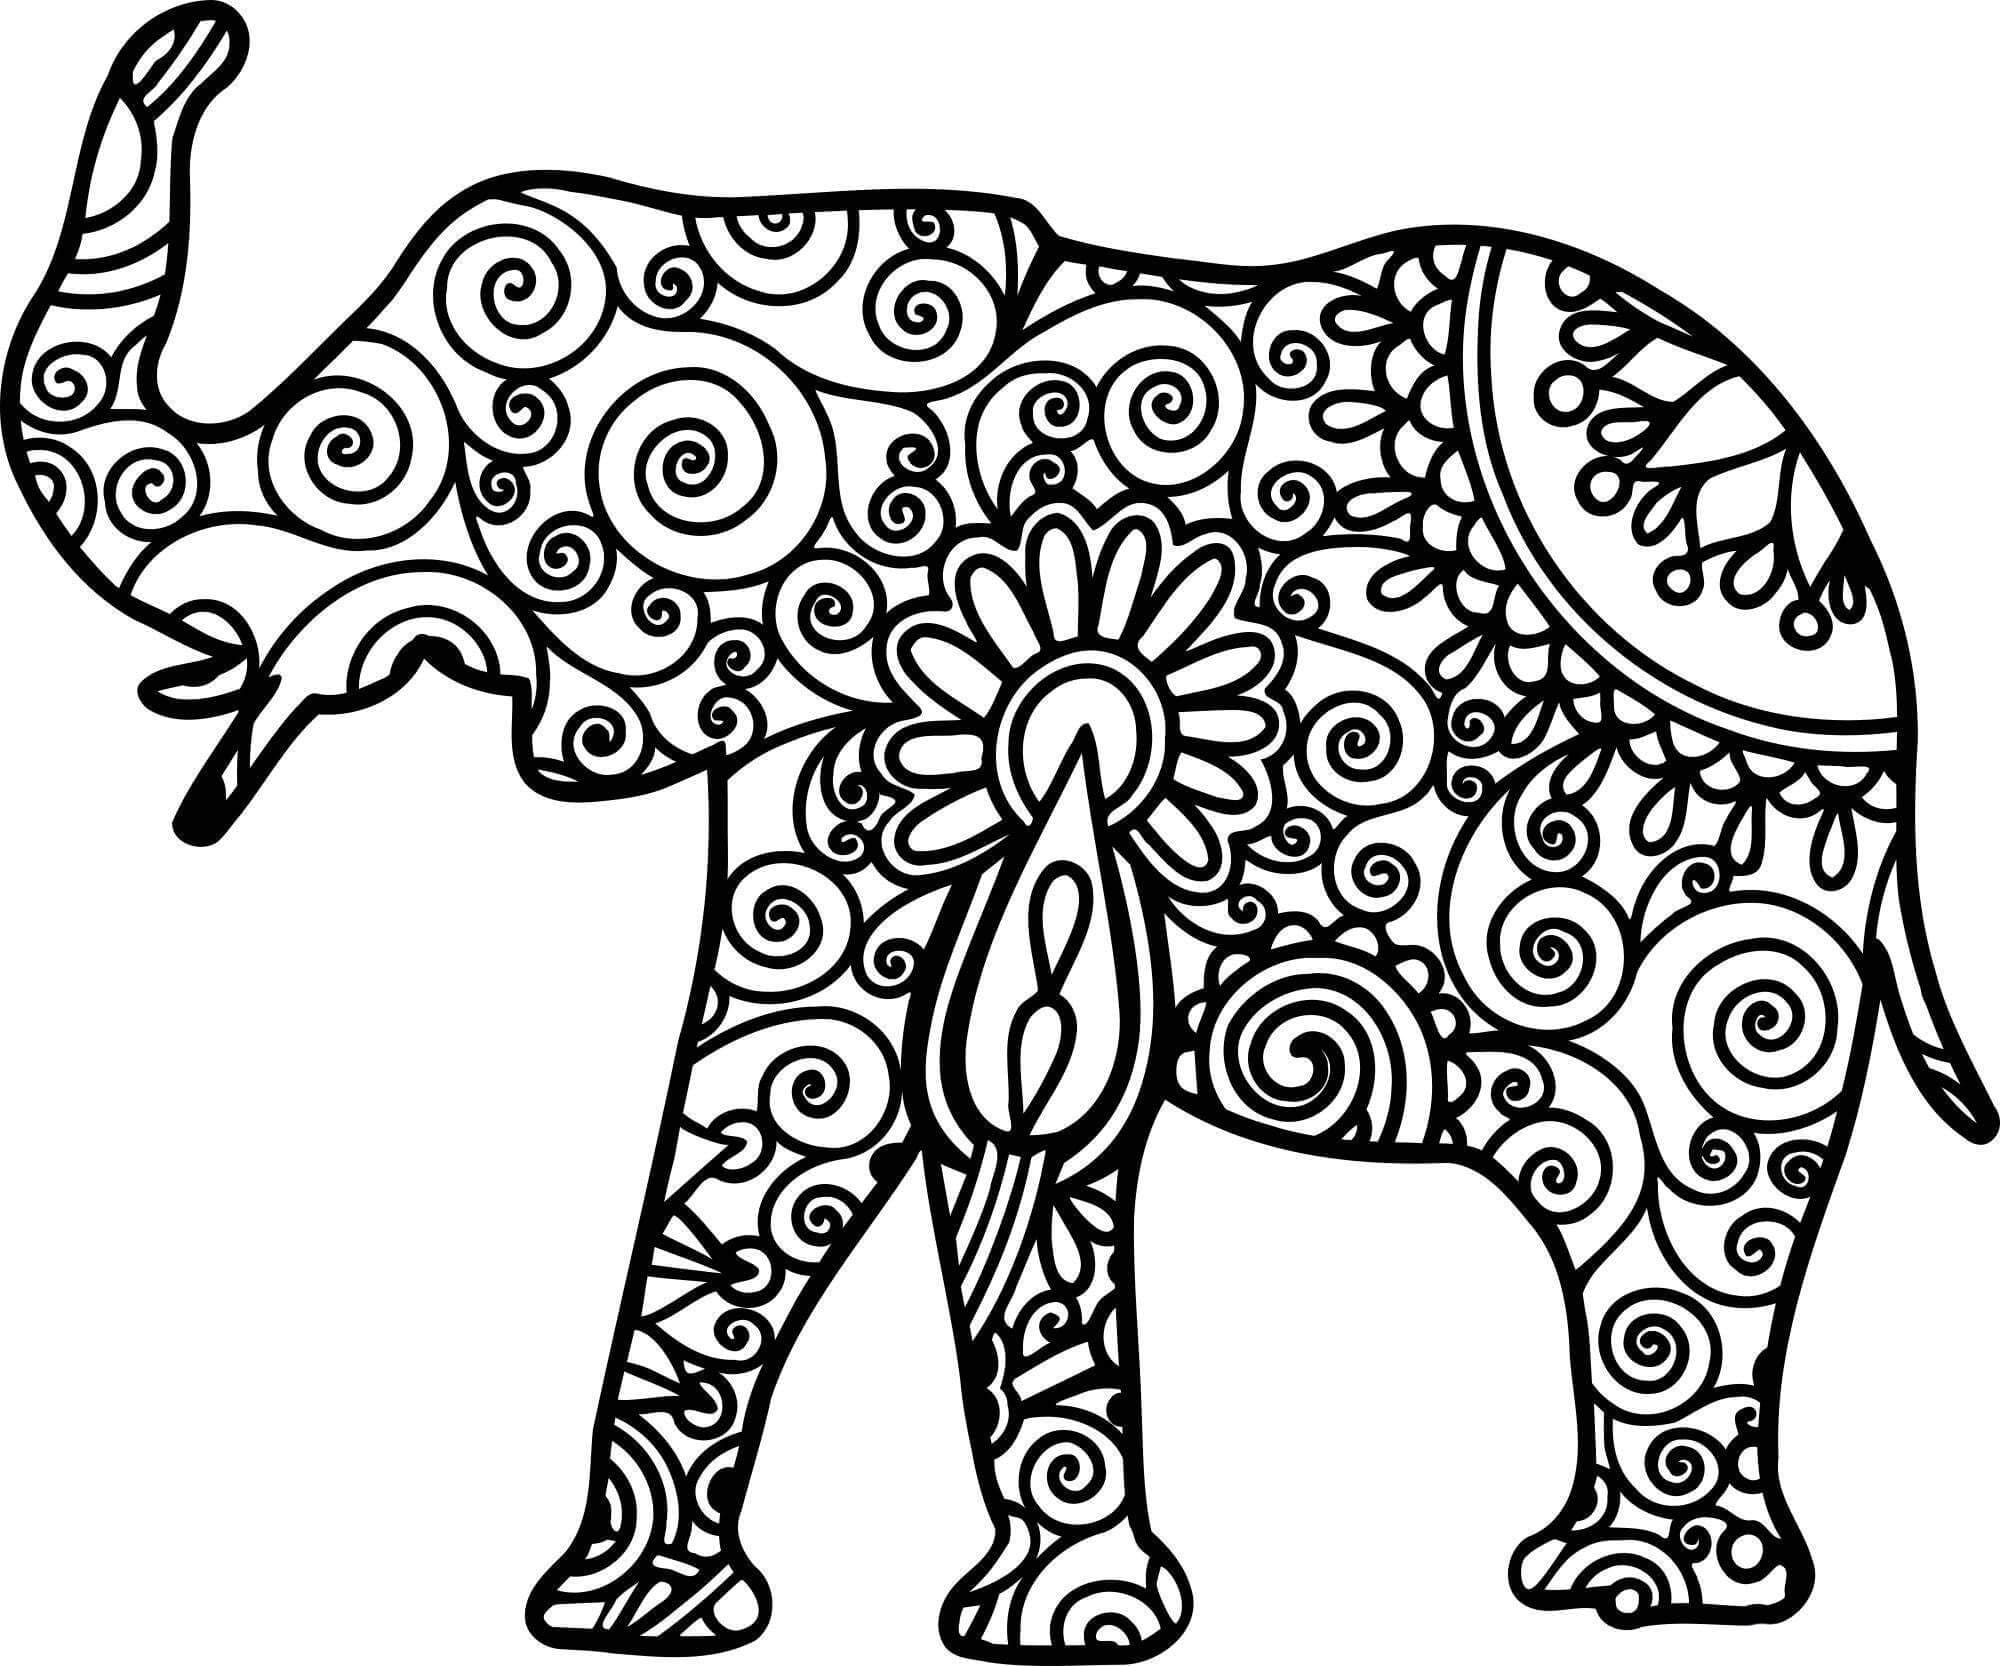 Dibujos de Impresionante Mandala de Elefante para colorear